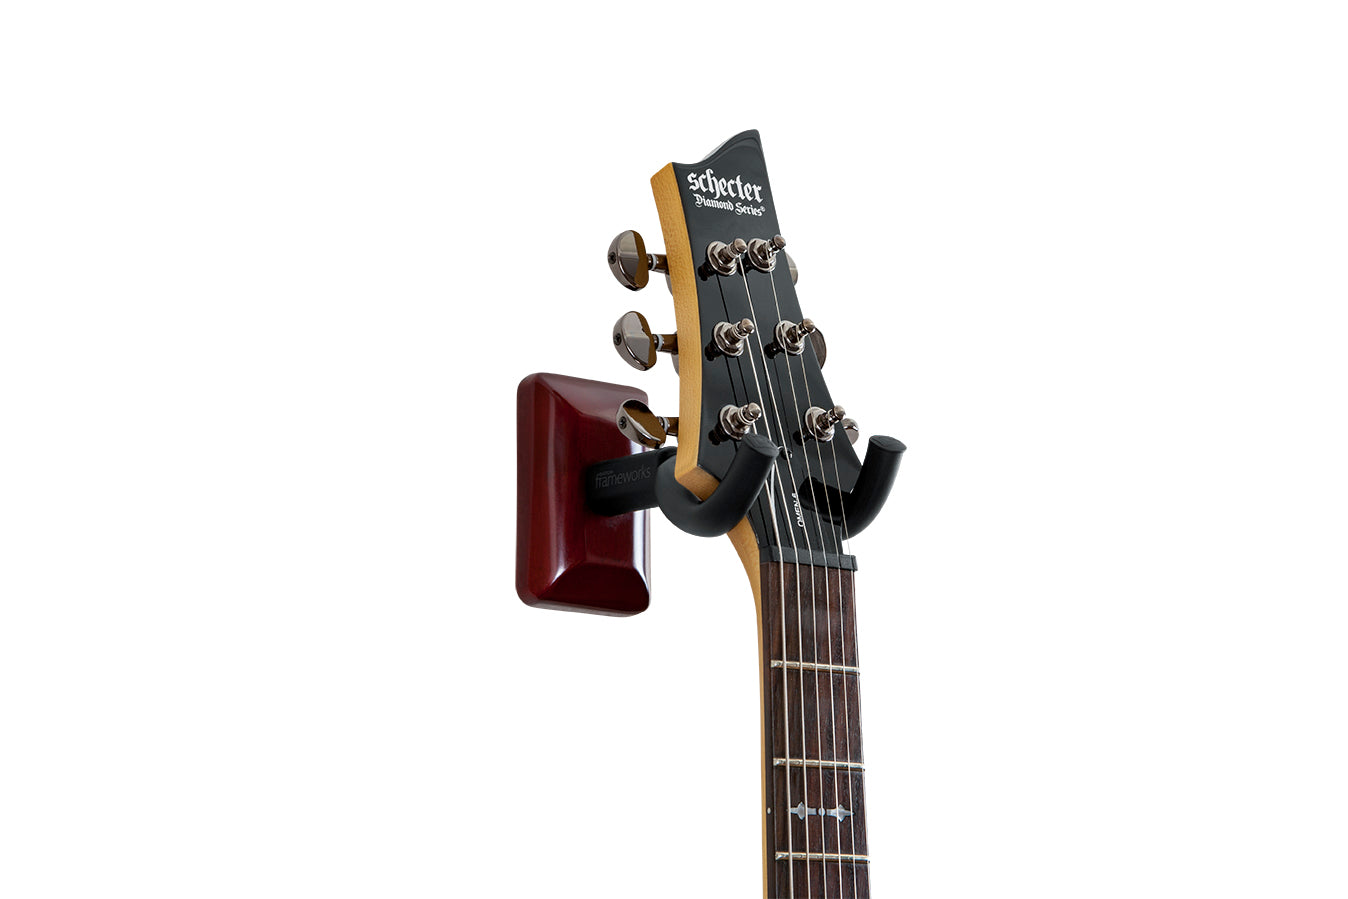 Gator Frameworks | Cherry Wall Mount Guitar Hanger